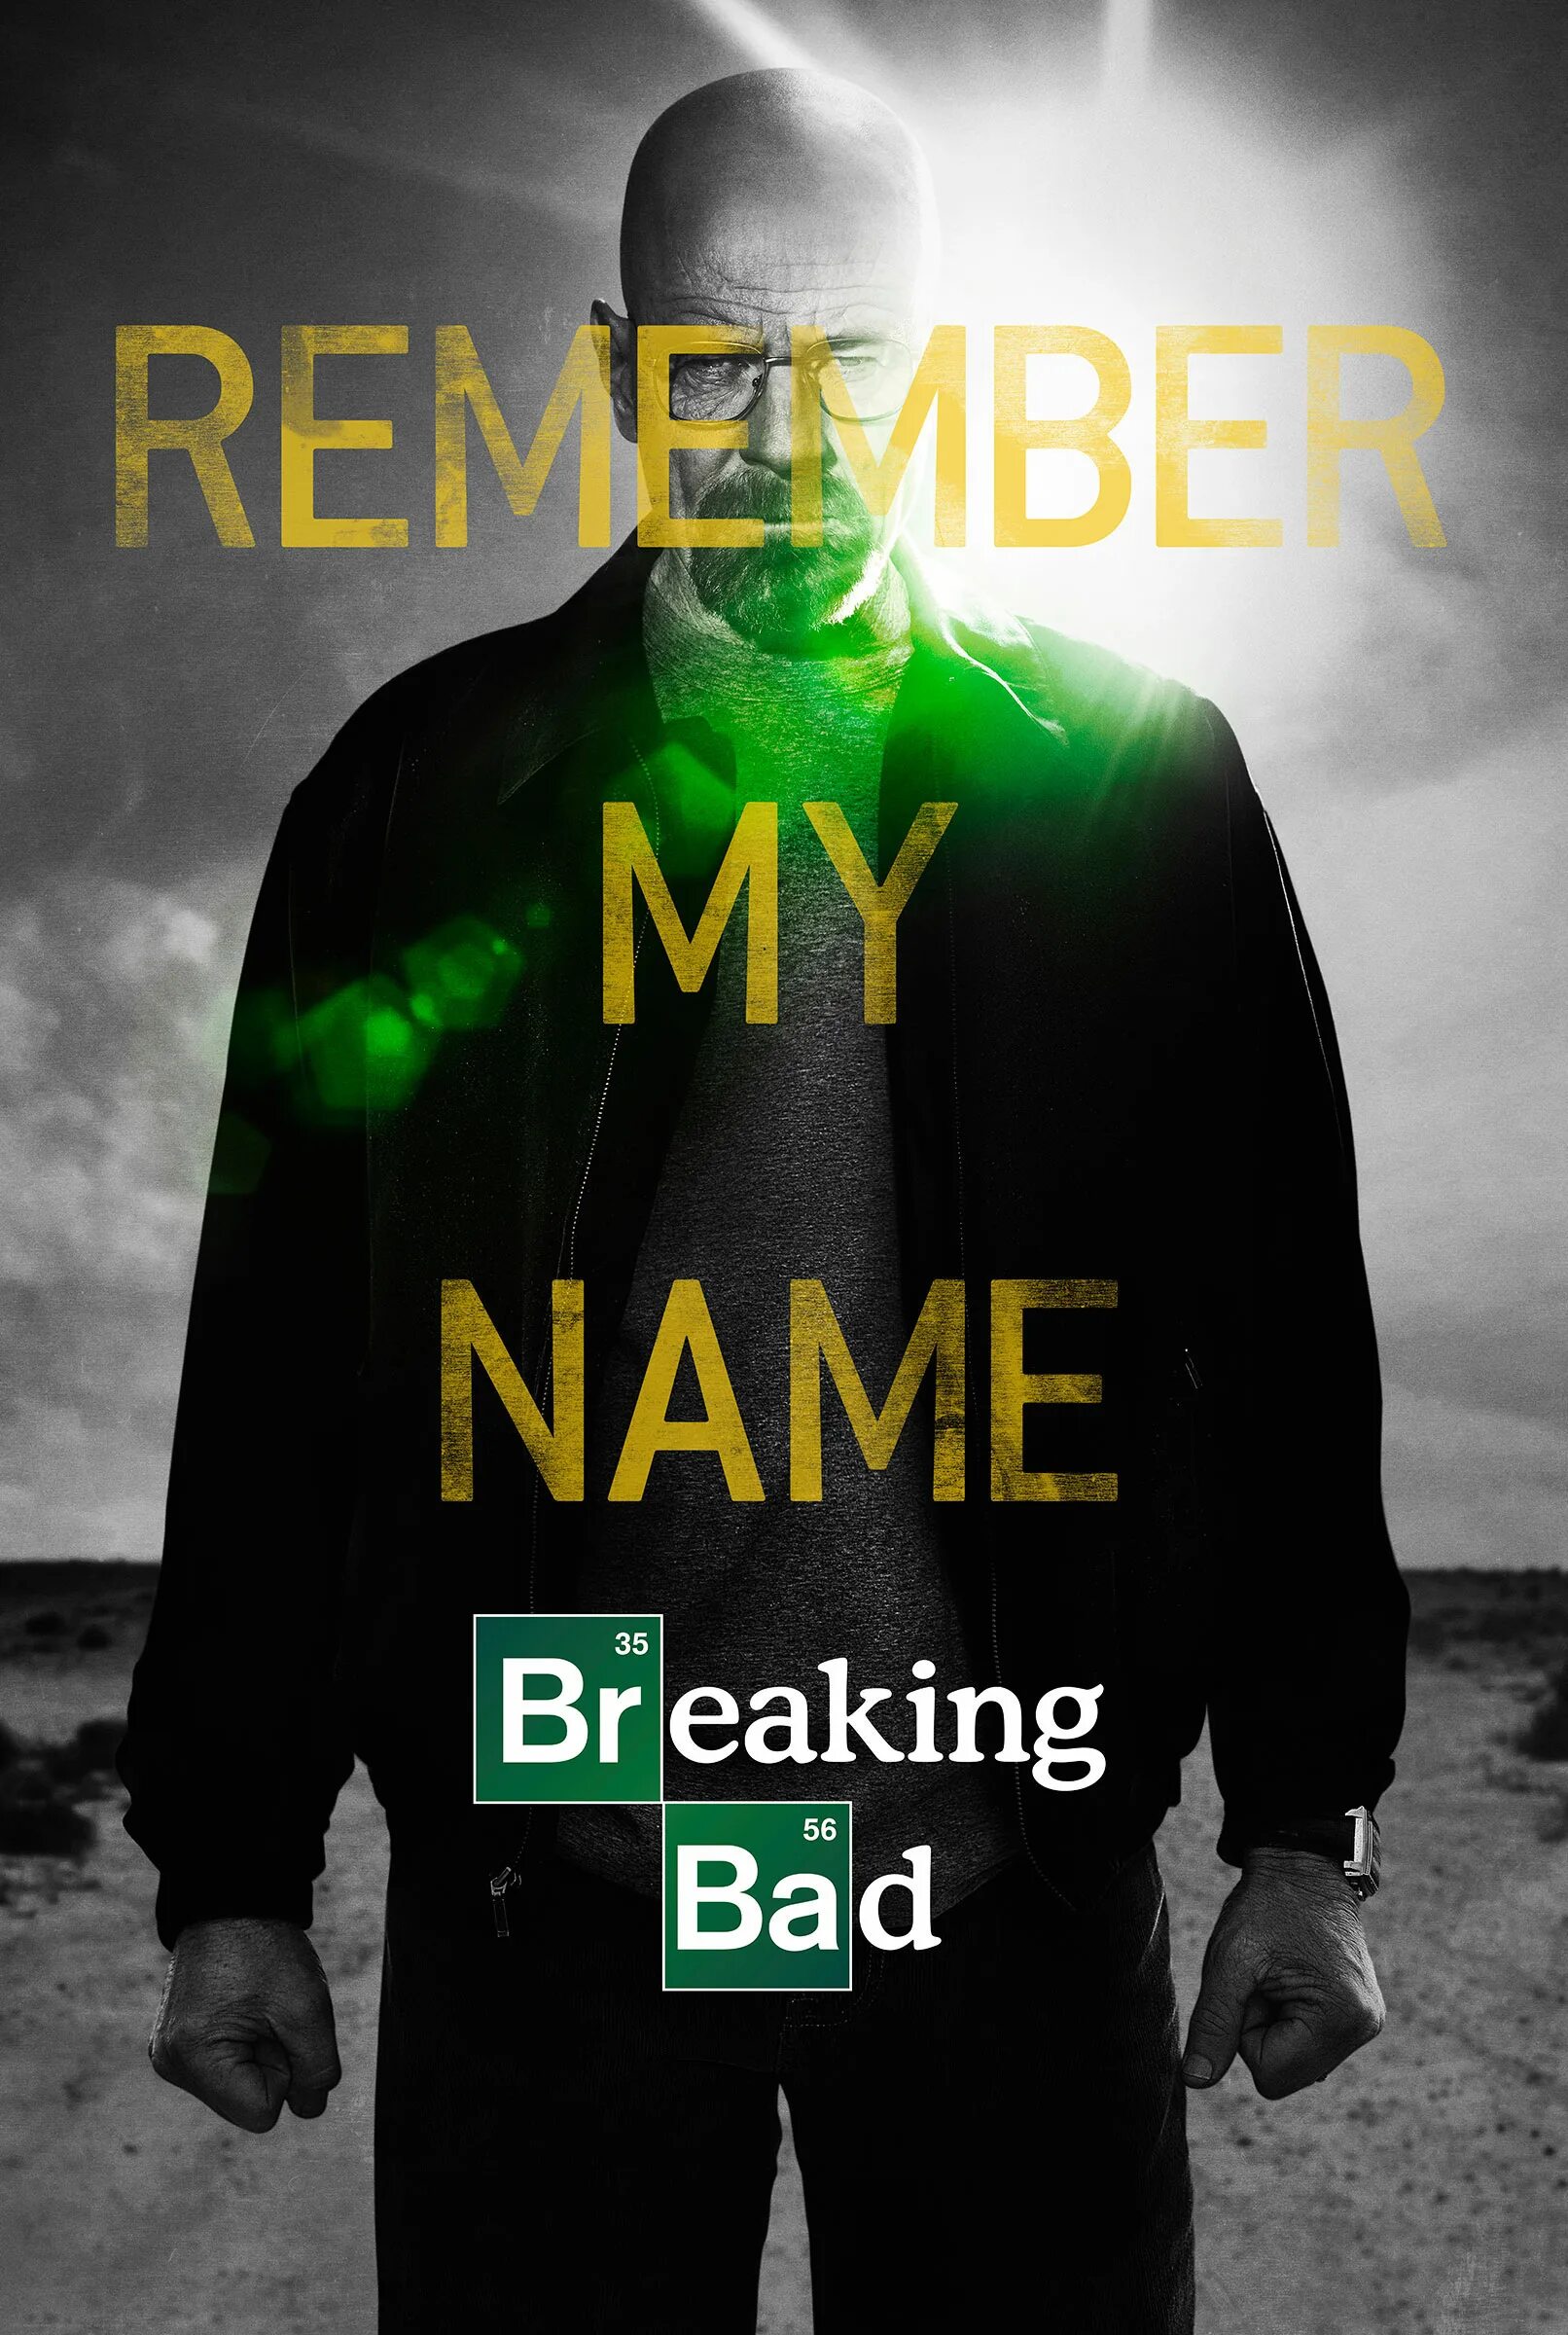 Remember my name Breaking Bad. Во все тяжкие. Во все тяжкие remember my name. Постер Breaking Bad.